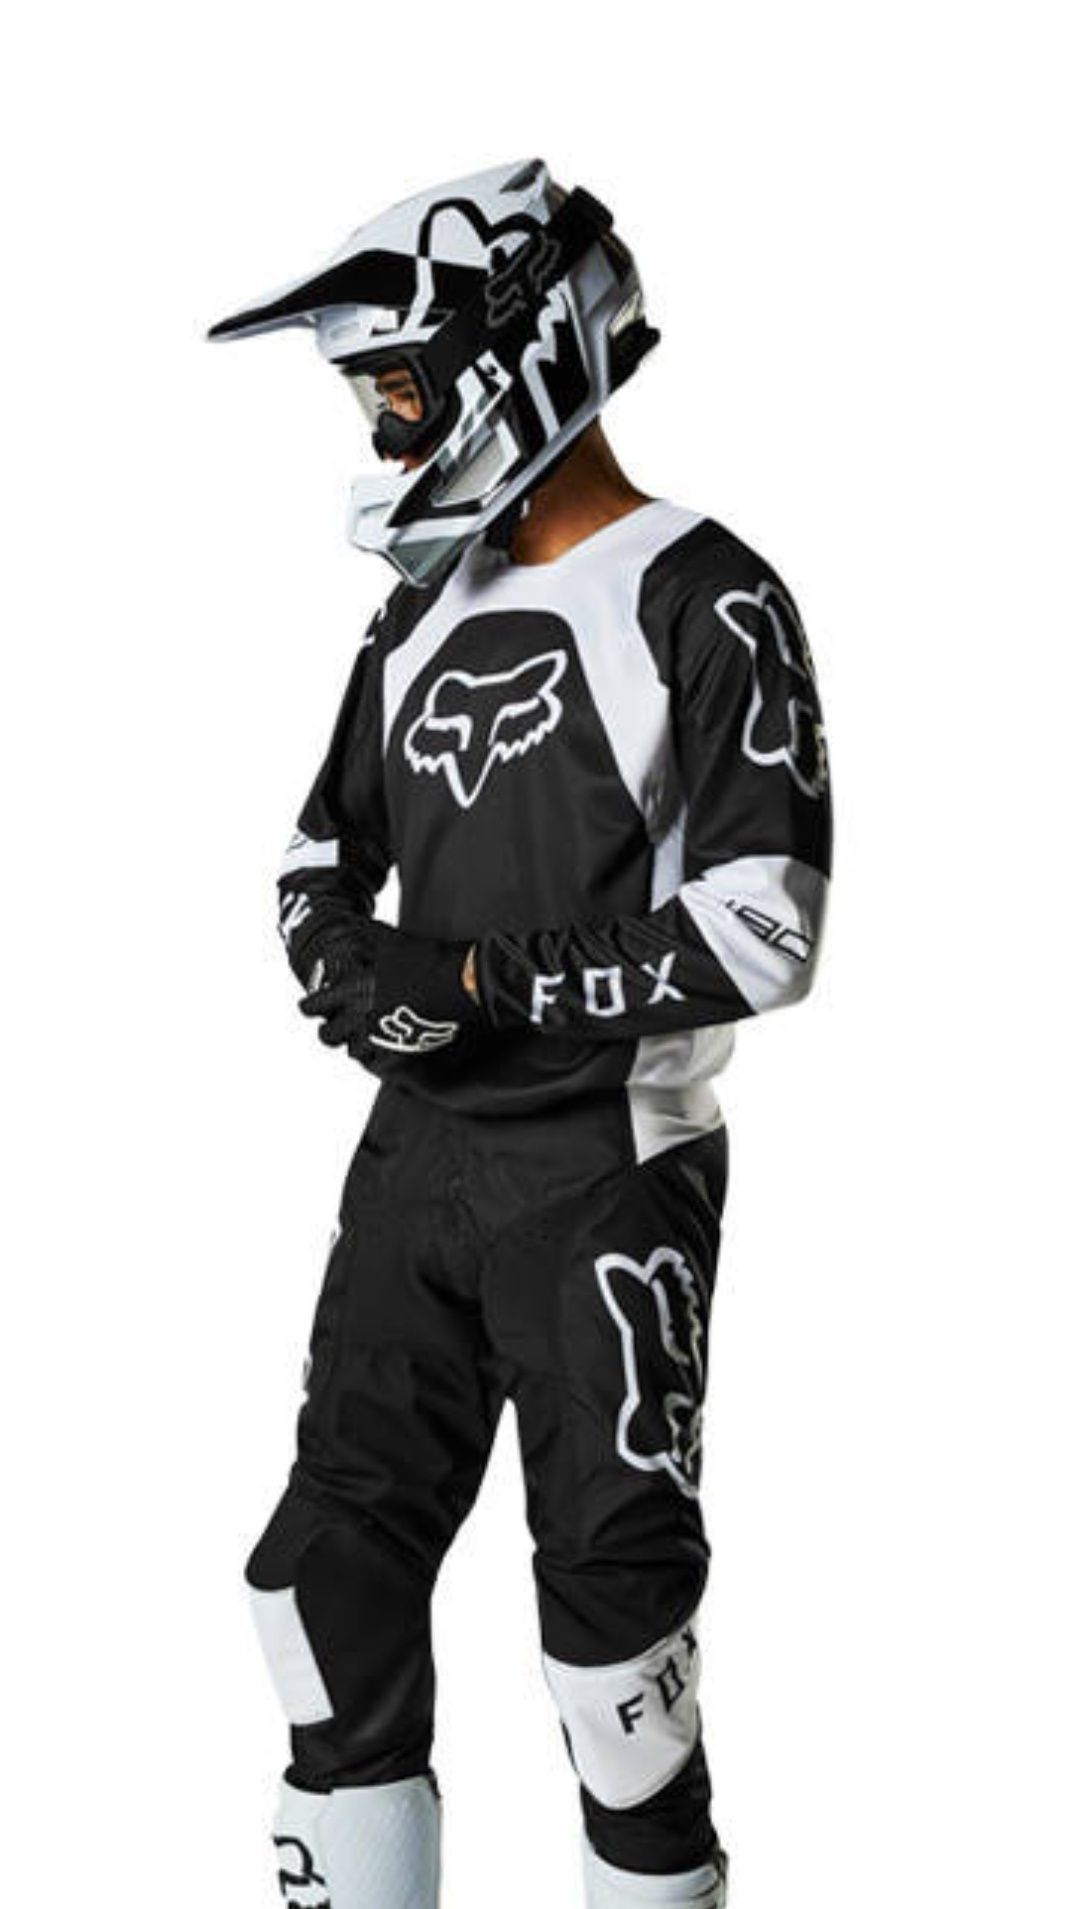 Koszulka spodnie strój Fox cross enduro quad offroad motocross